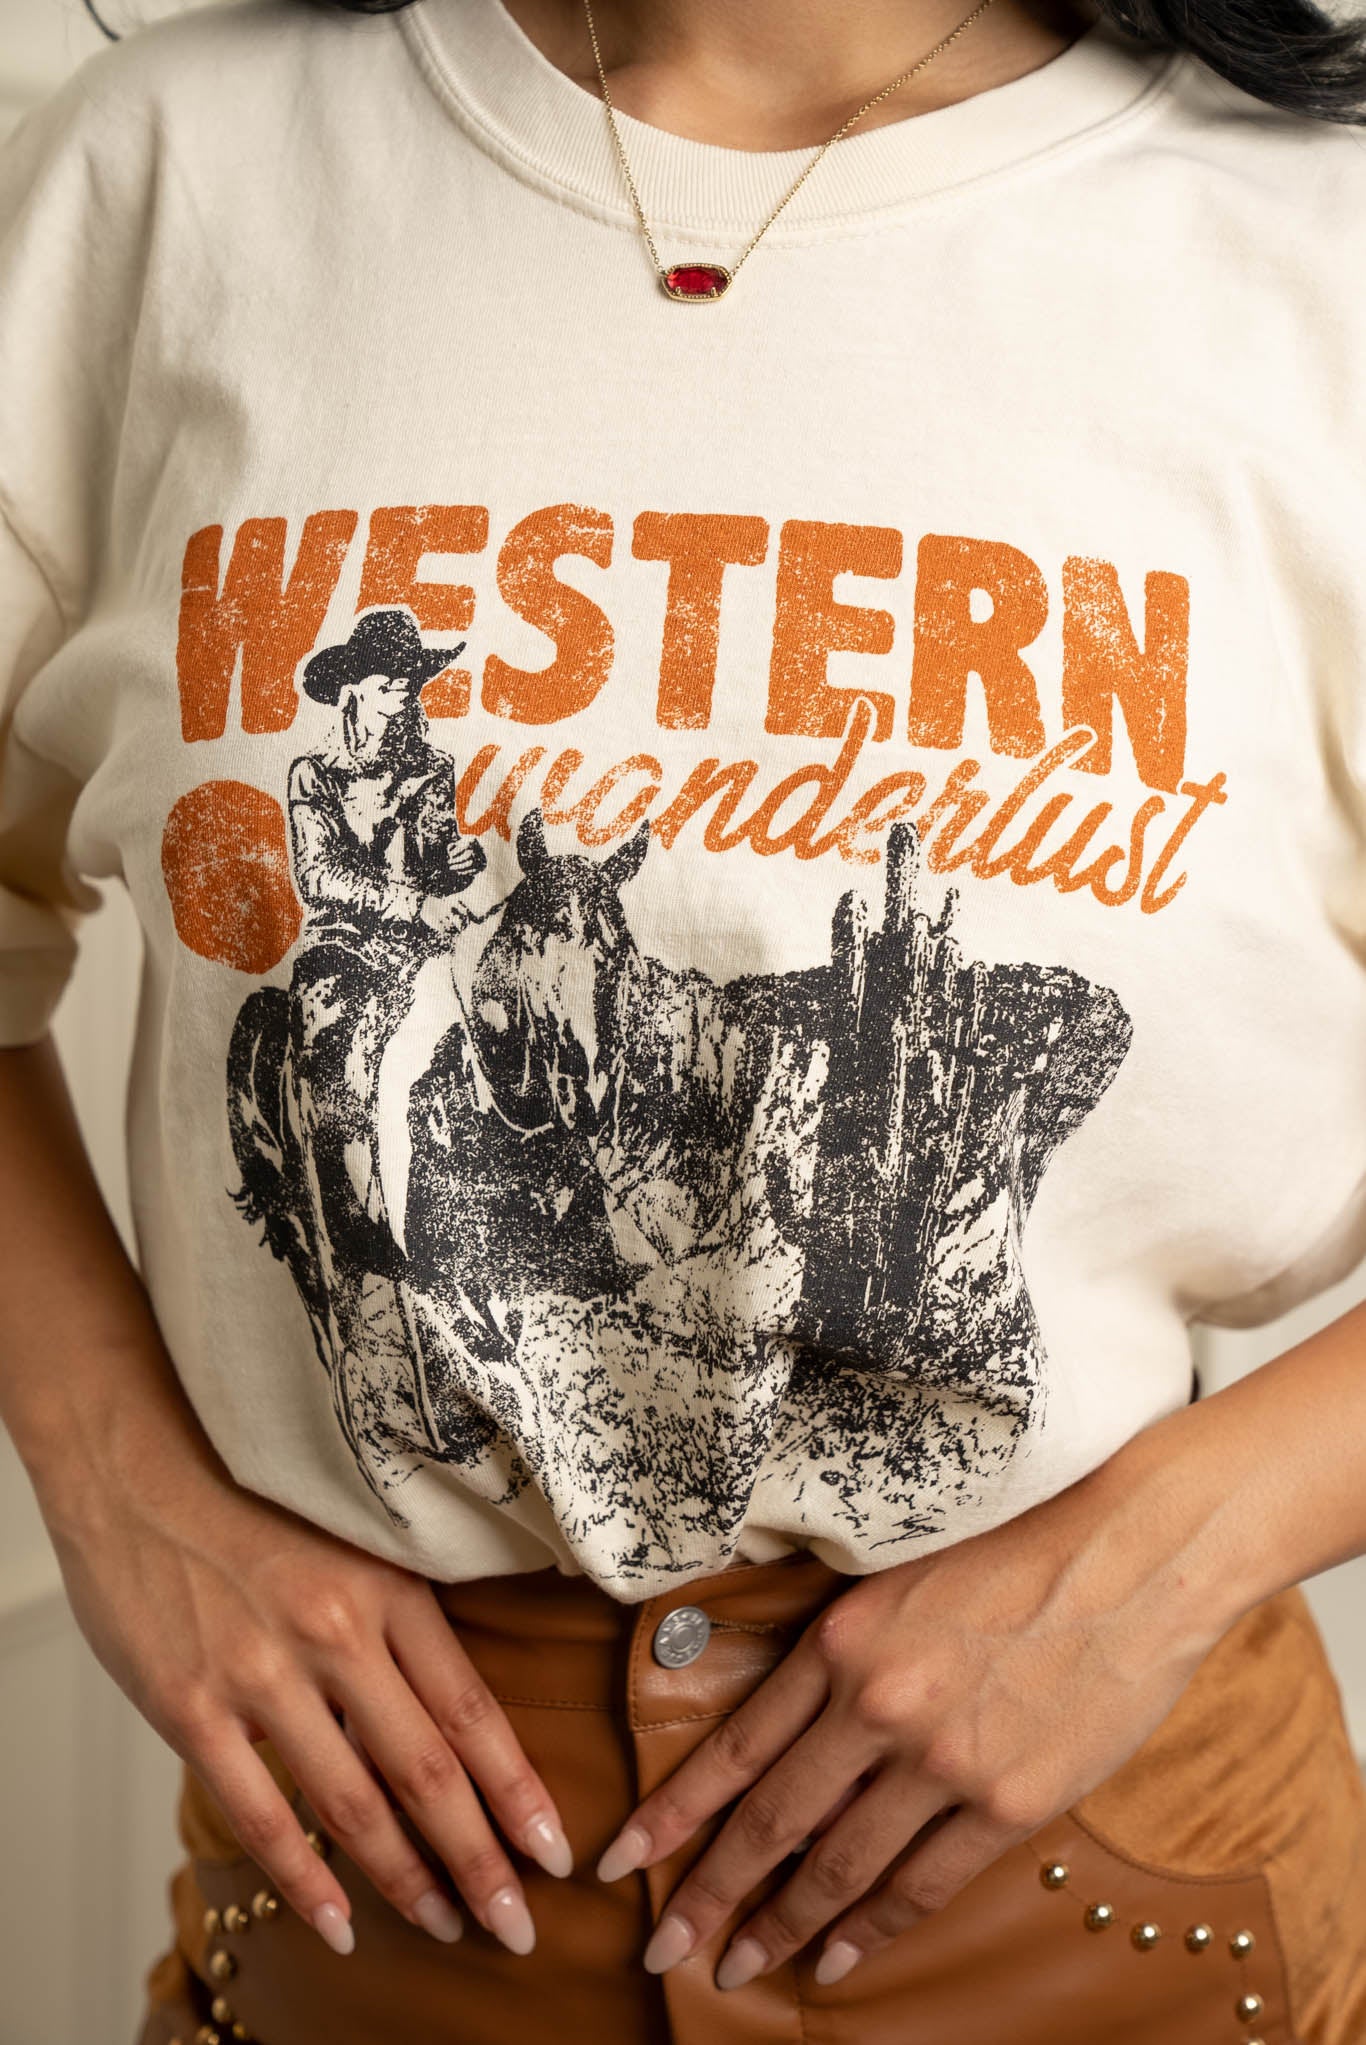 Rockem-Westernwonderlust-shirt.jpg